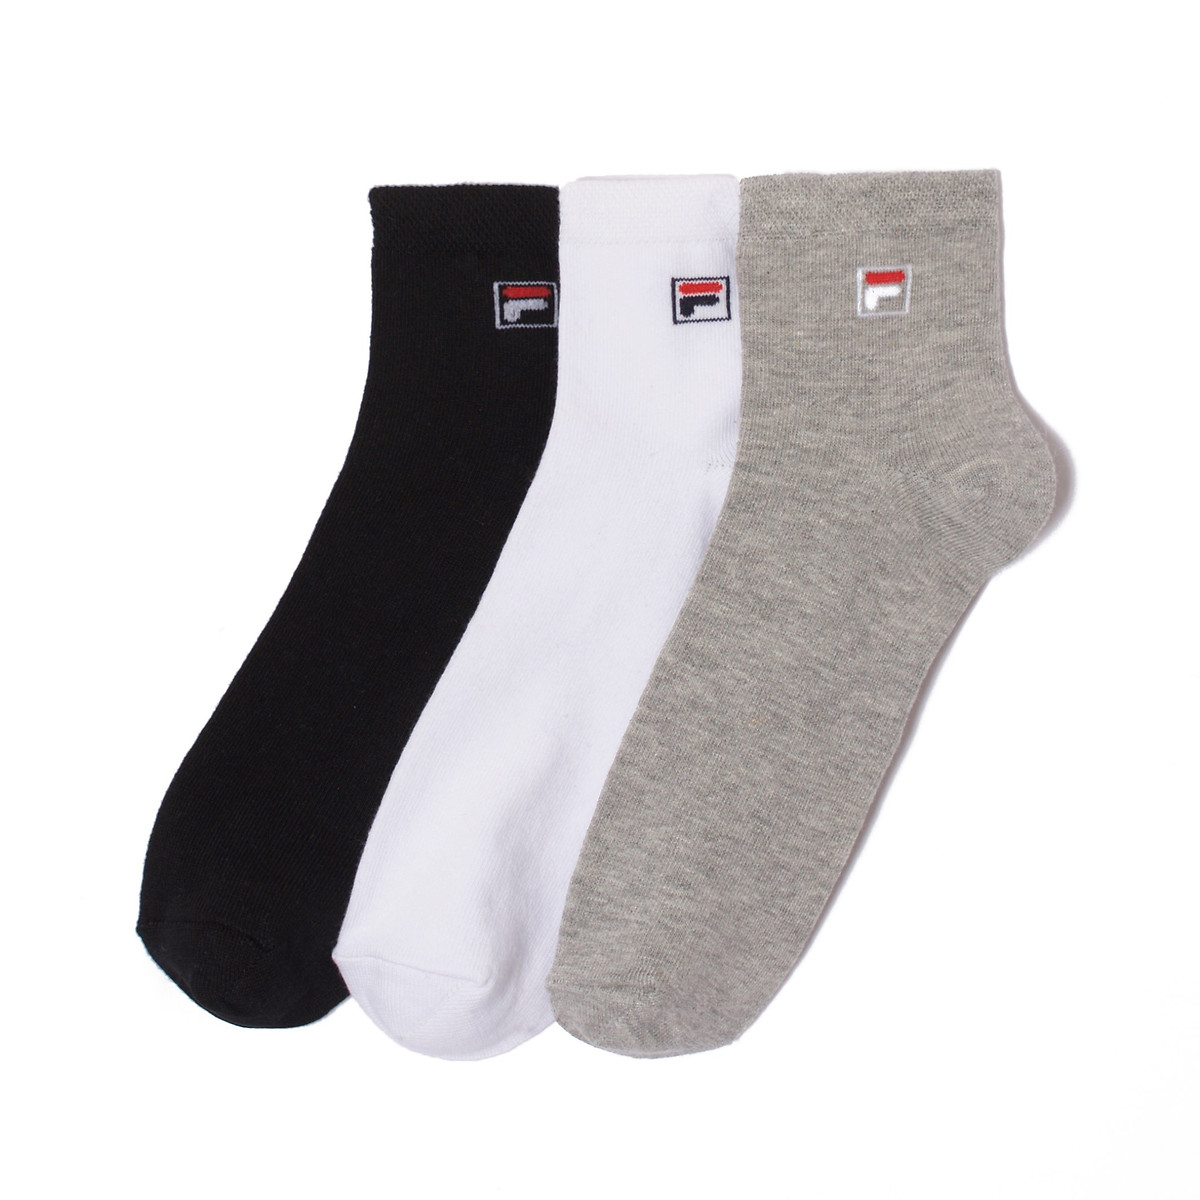 Pack of 3 Pairs of Unisex Trainer Socks